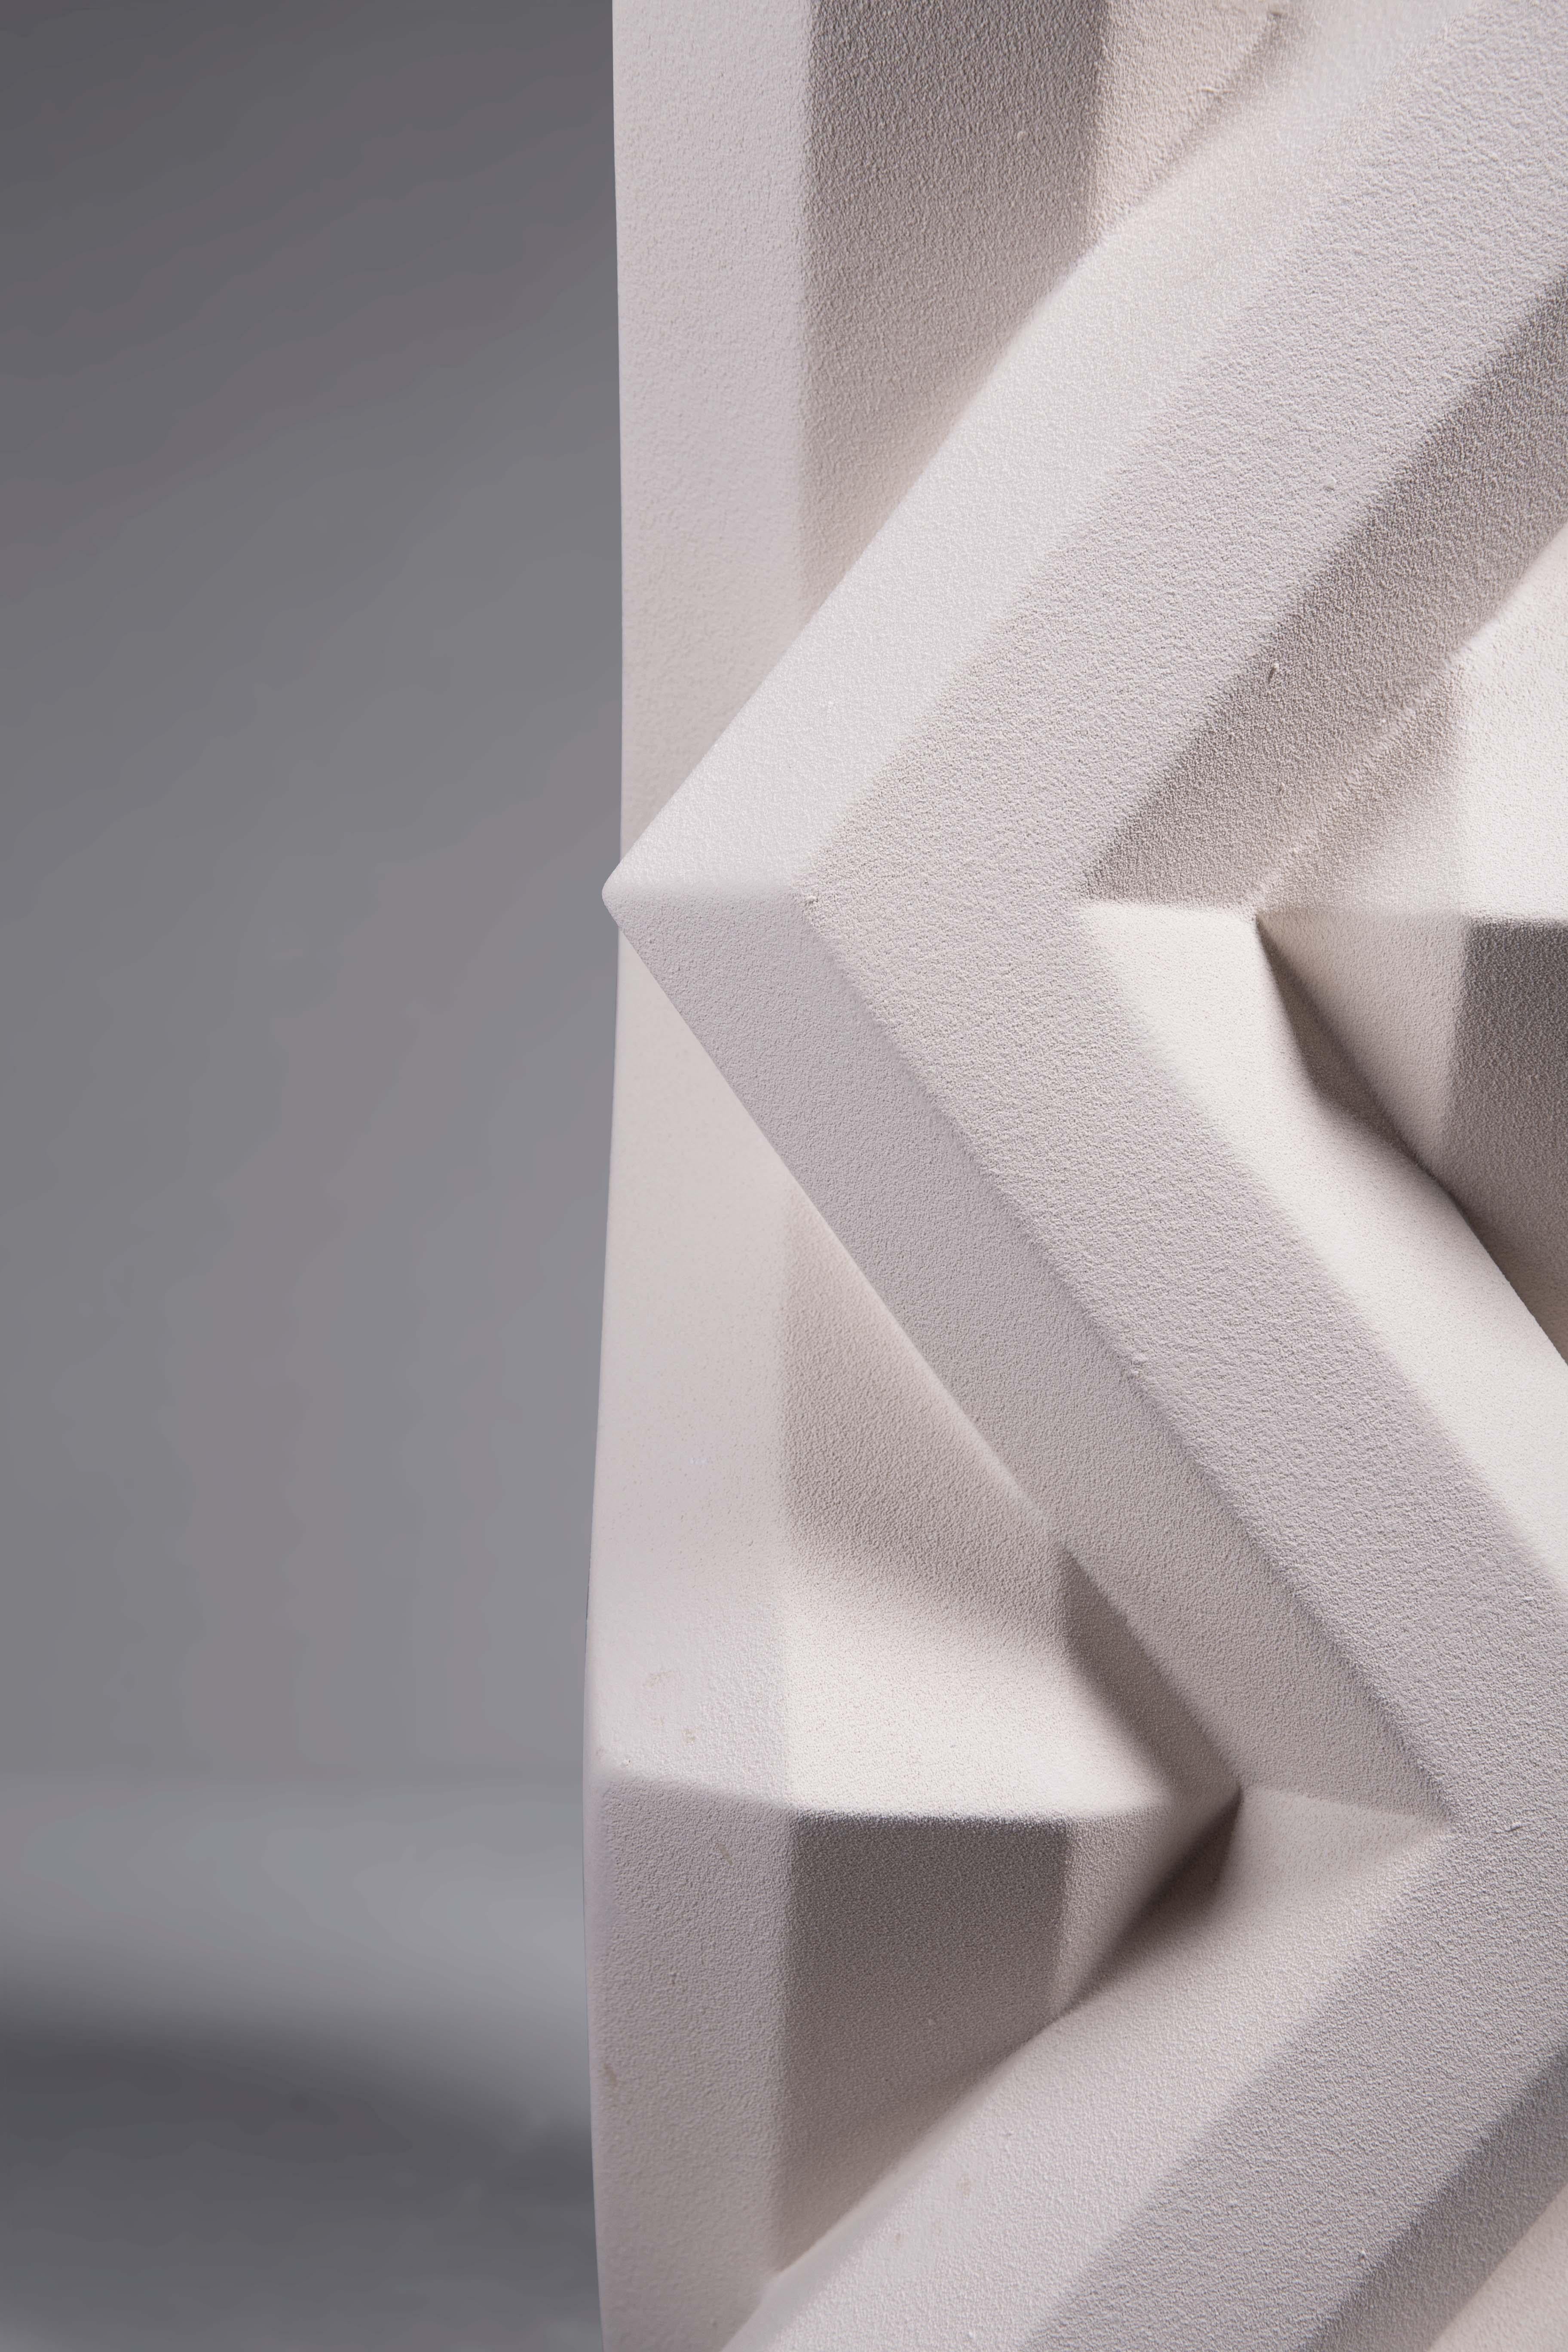 Modern Fortress Tower Vase Geometric Contemporary White Ceramic, Lara Bohinc, in Stock For Sale